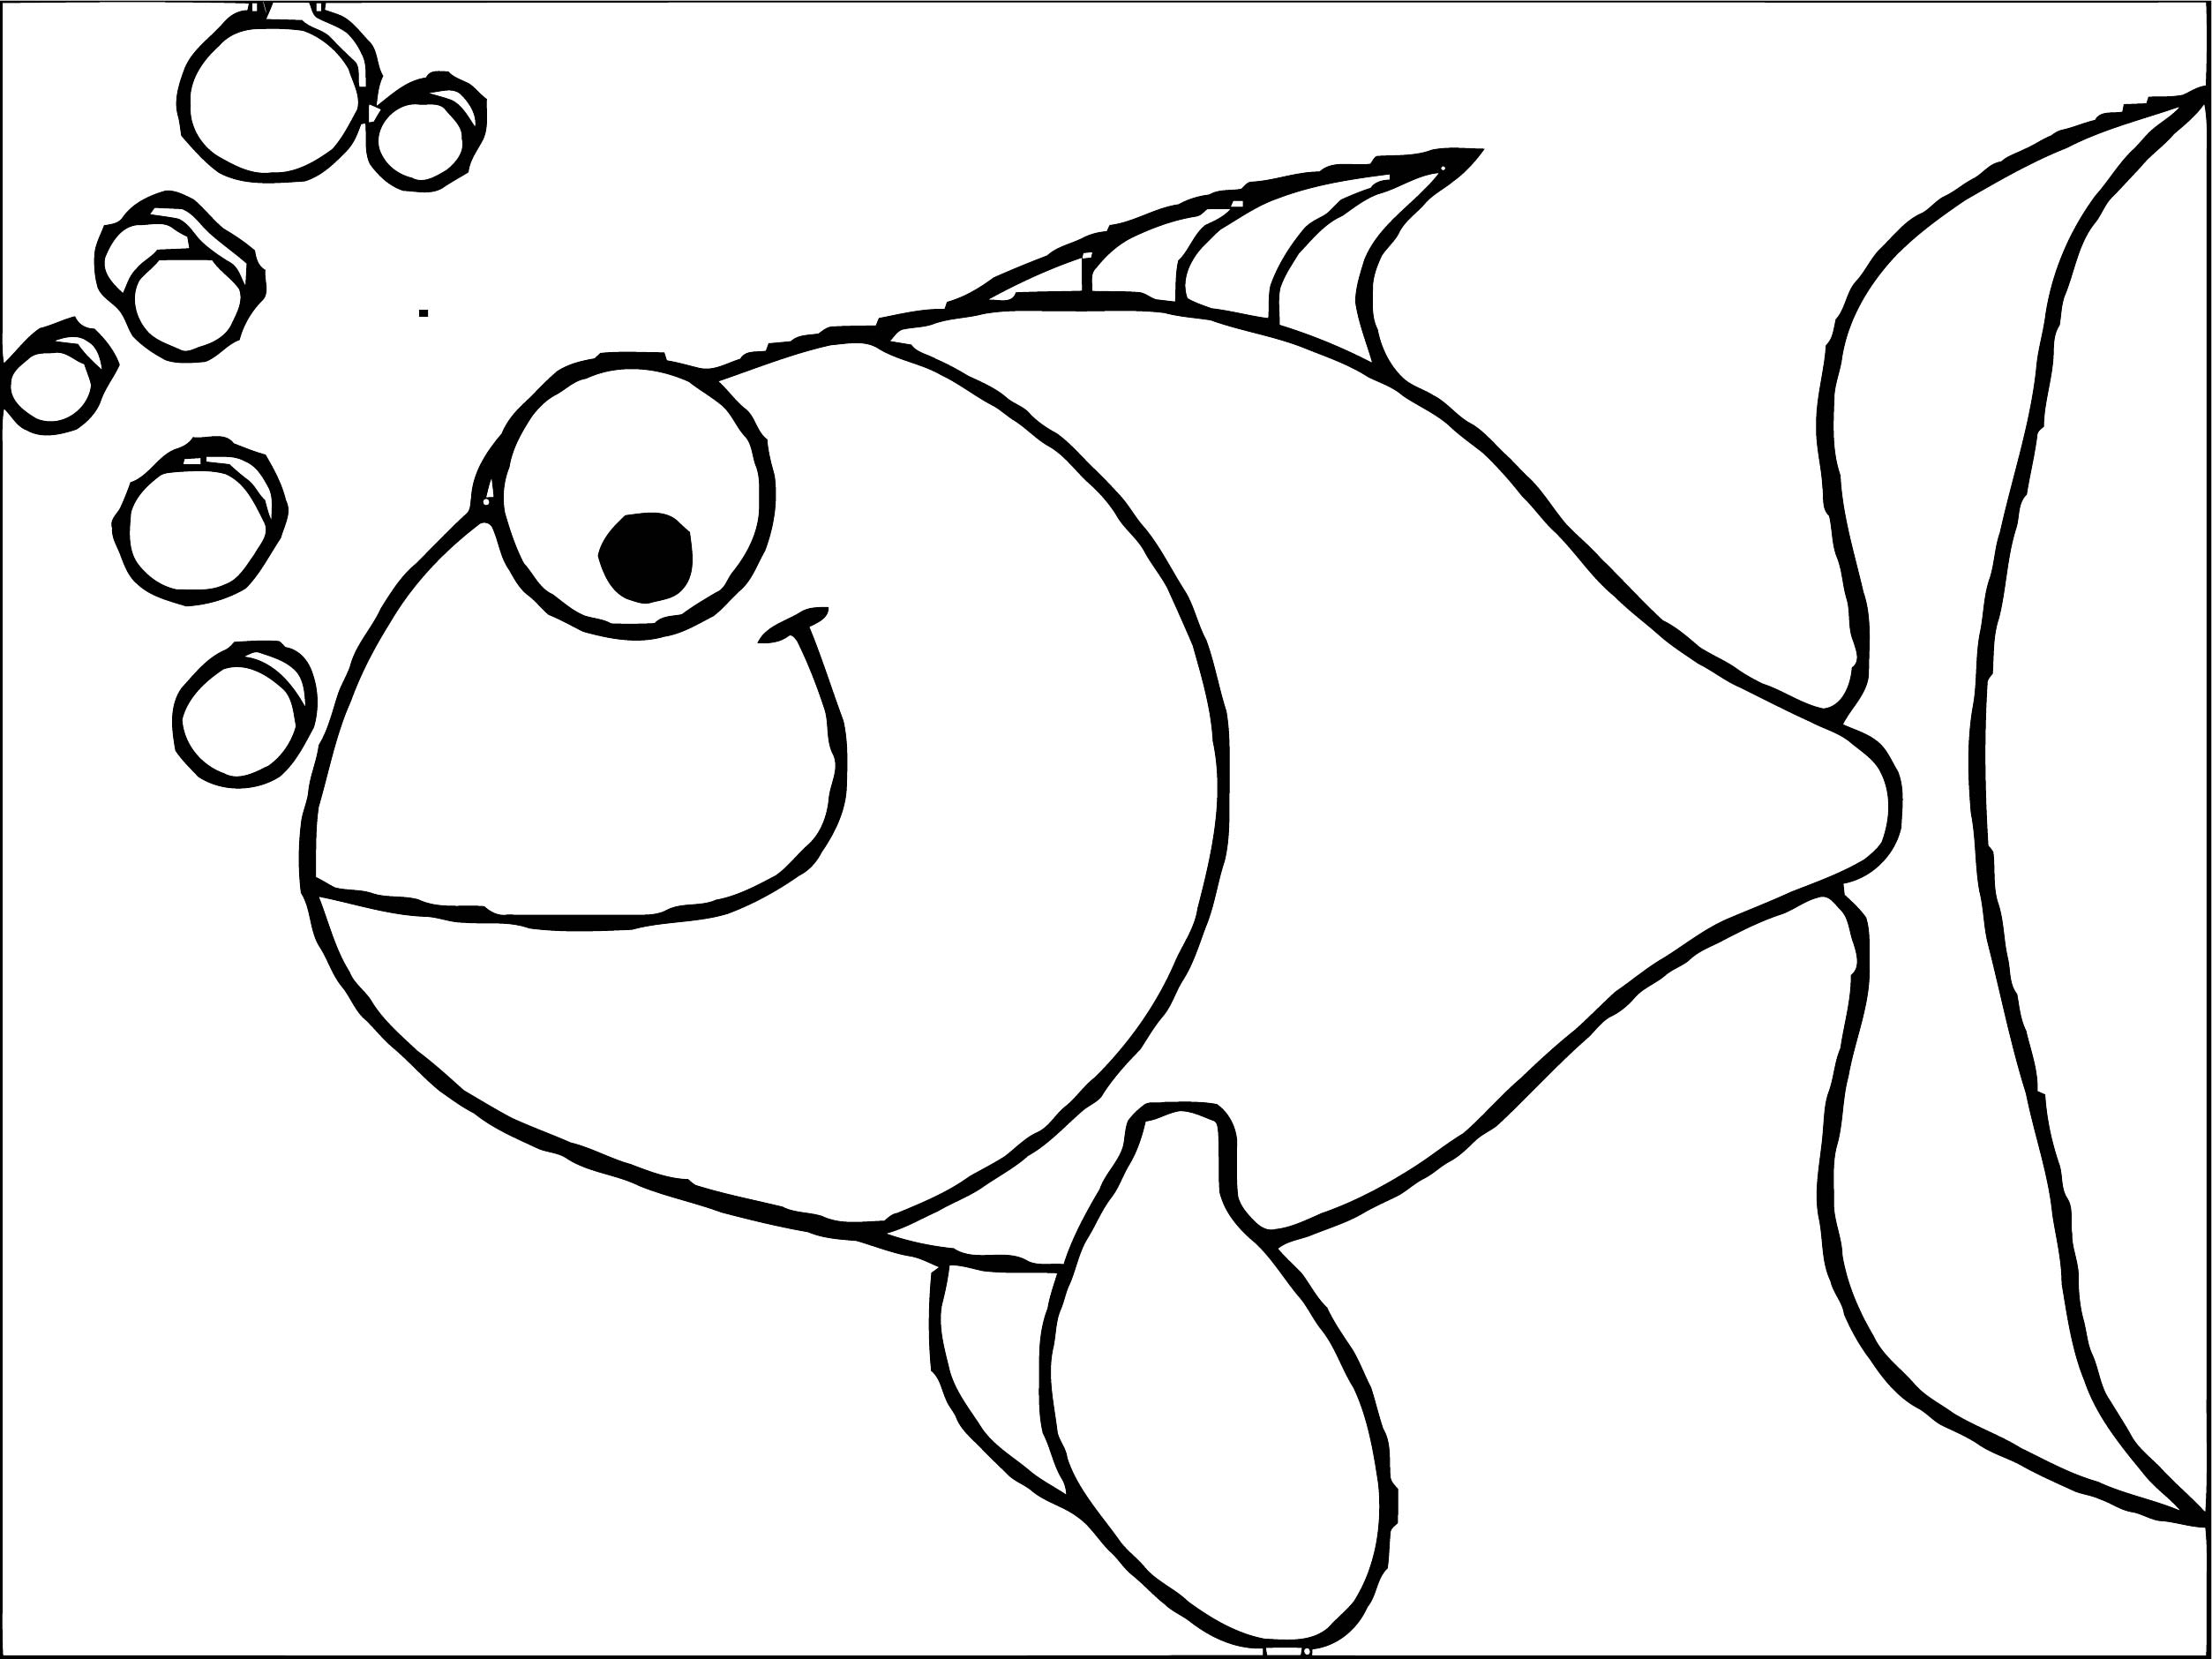 Fish Coloring Page WeColoringPage 100 - Wecoloringpage.com